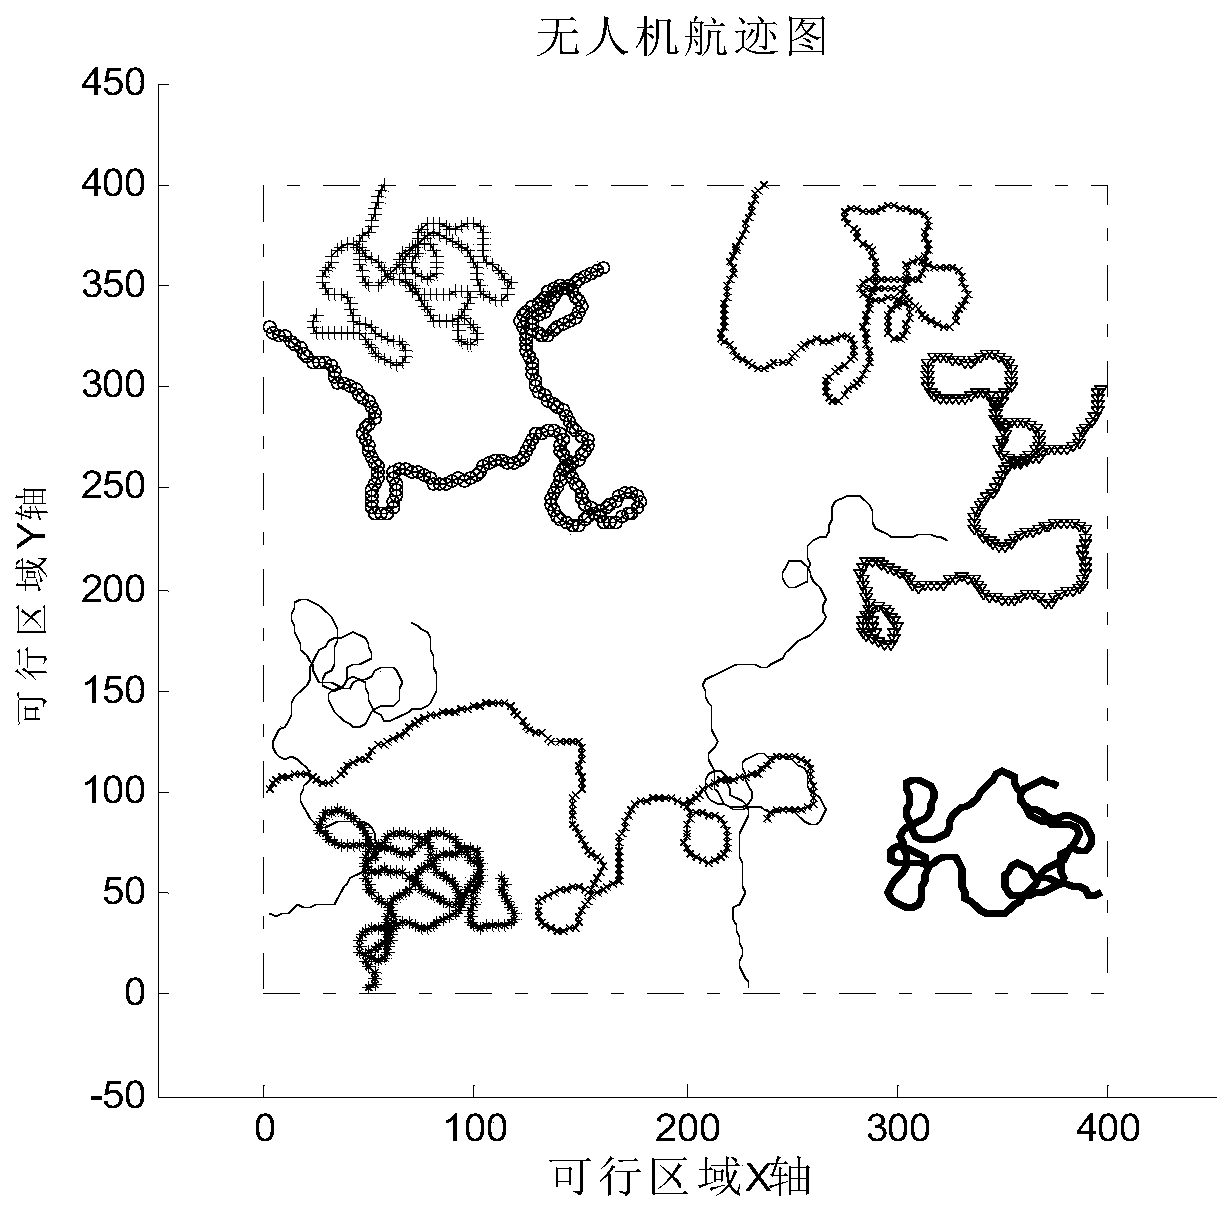 A multi-step optimization method for UAV swarm area coverage based on ant colony algorithm